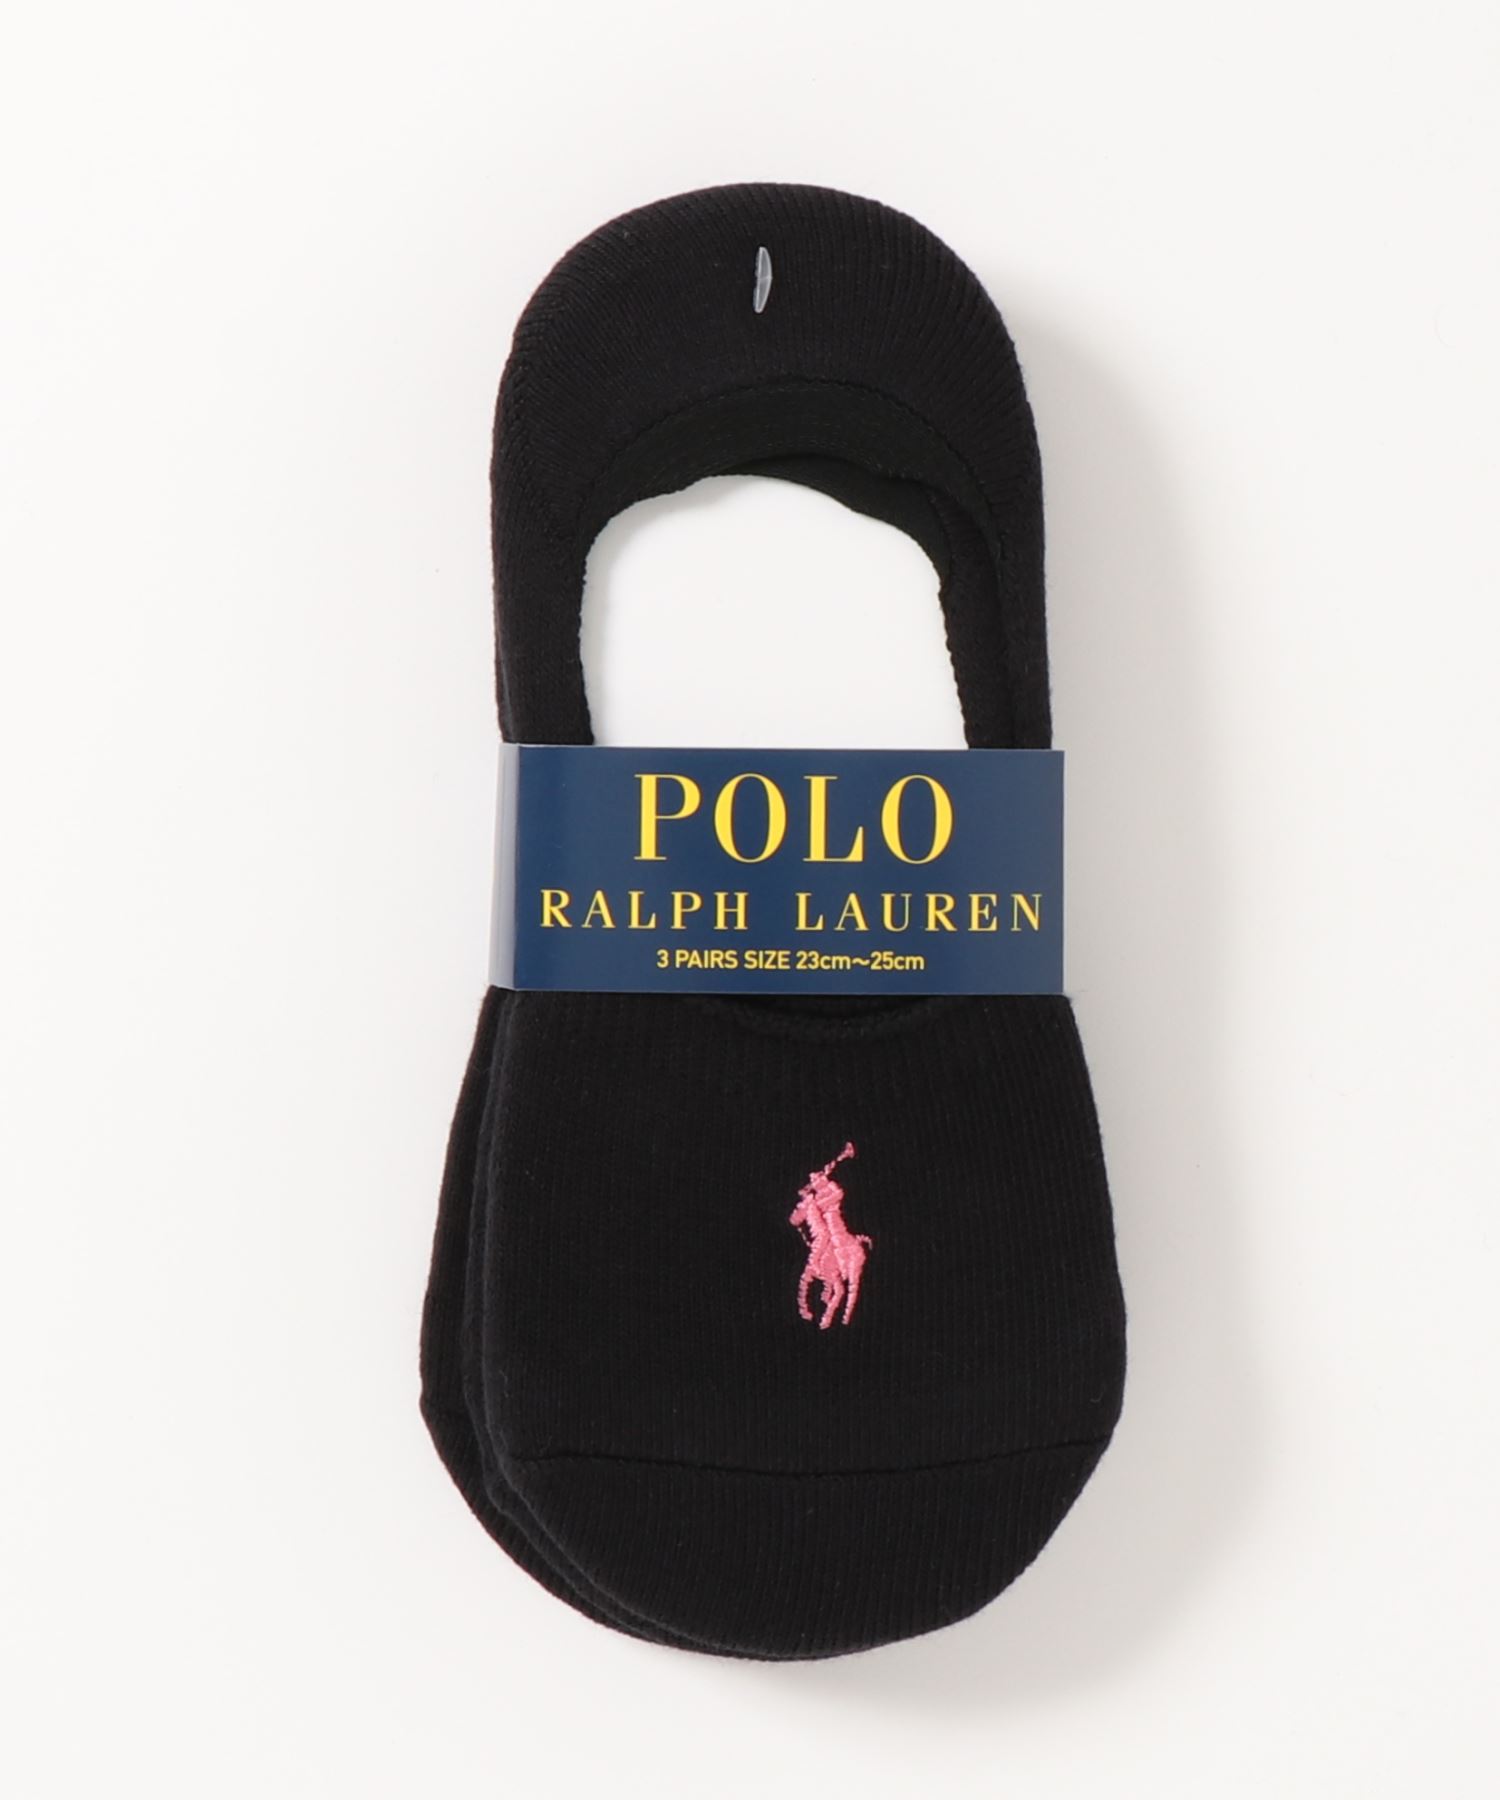 POLO RALPH LAUREN 国内初の直営店 ポロラルフローレン ワンポイントロゴカバーソックス 大量入荷 ウイメンズ 靴下3足組